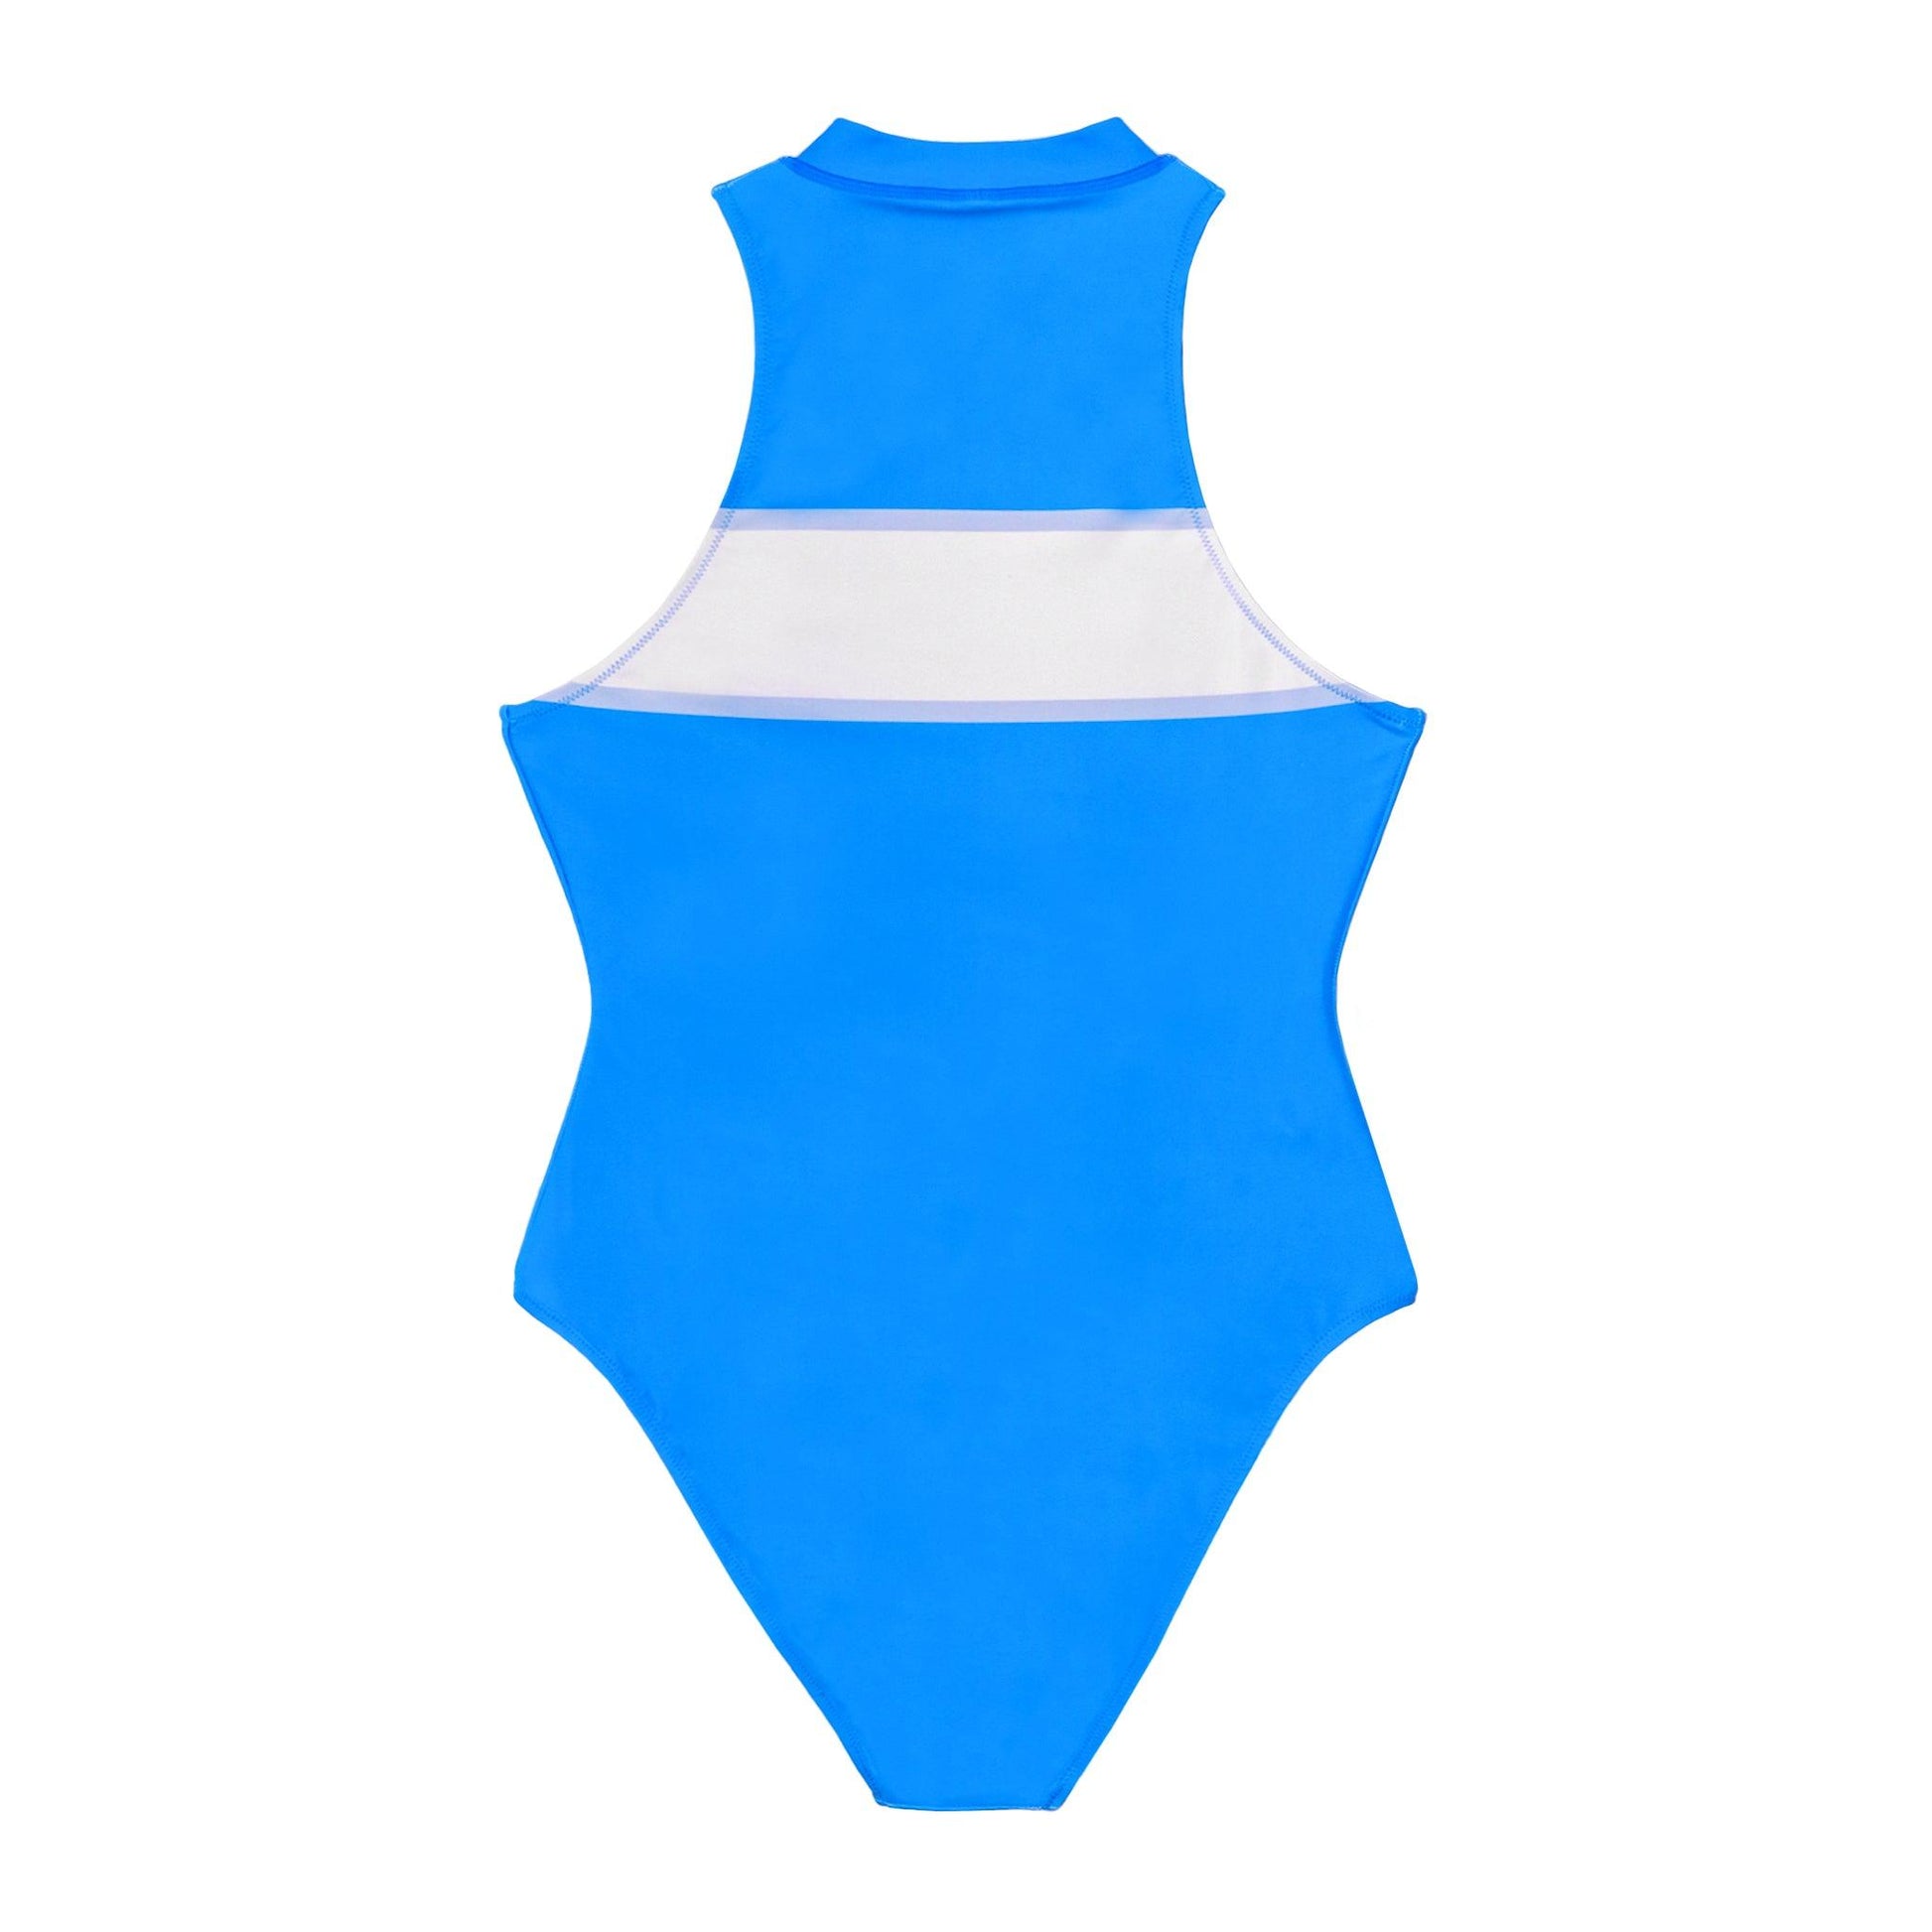 Back of Bud Light Swimsuit- no design